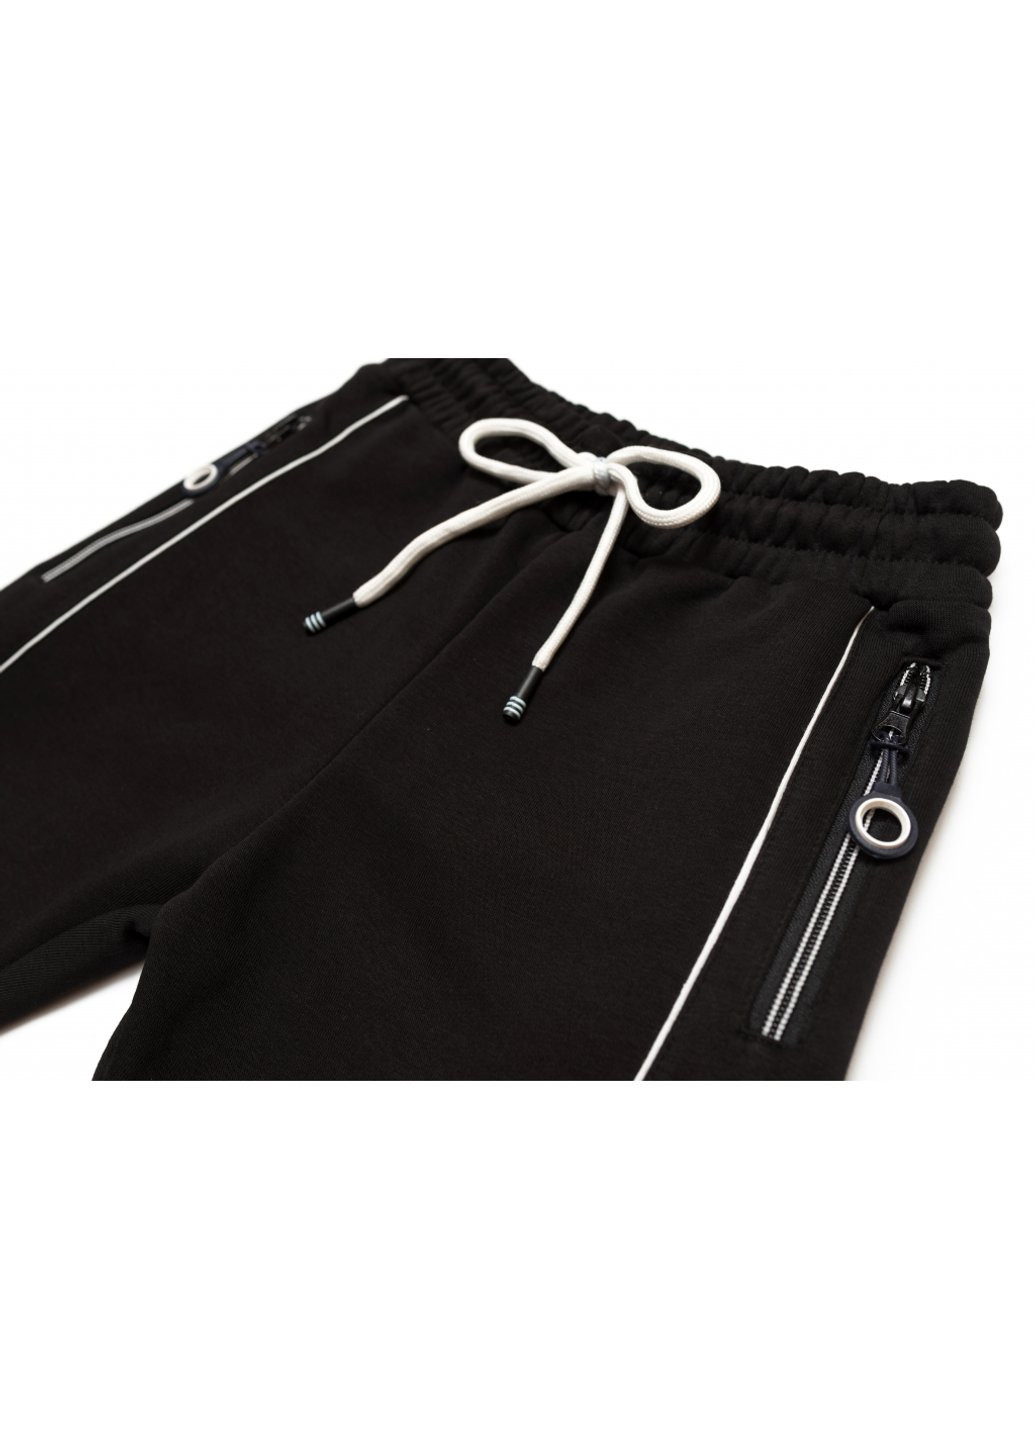 Спортивный костюм на молнии (7052-146B-black) A-yugi (257140315)